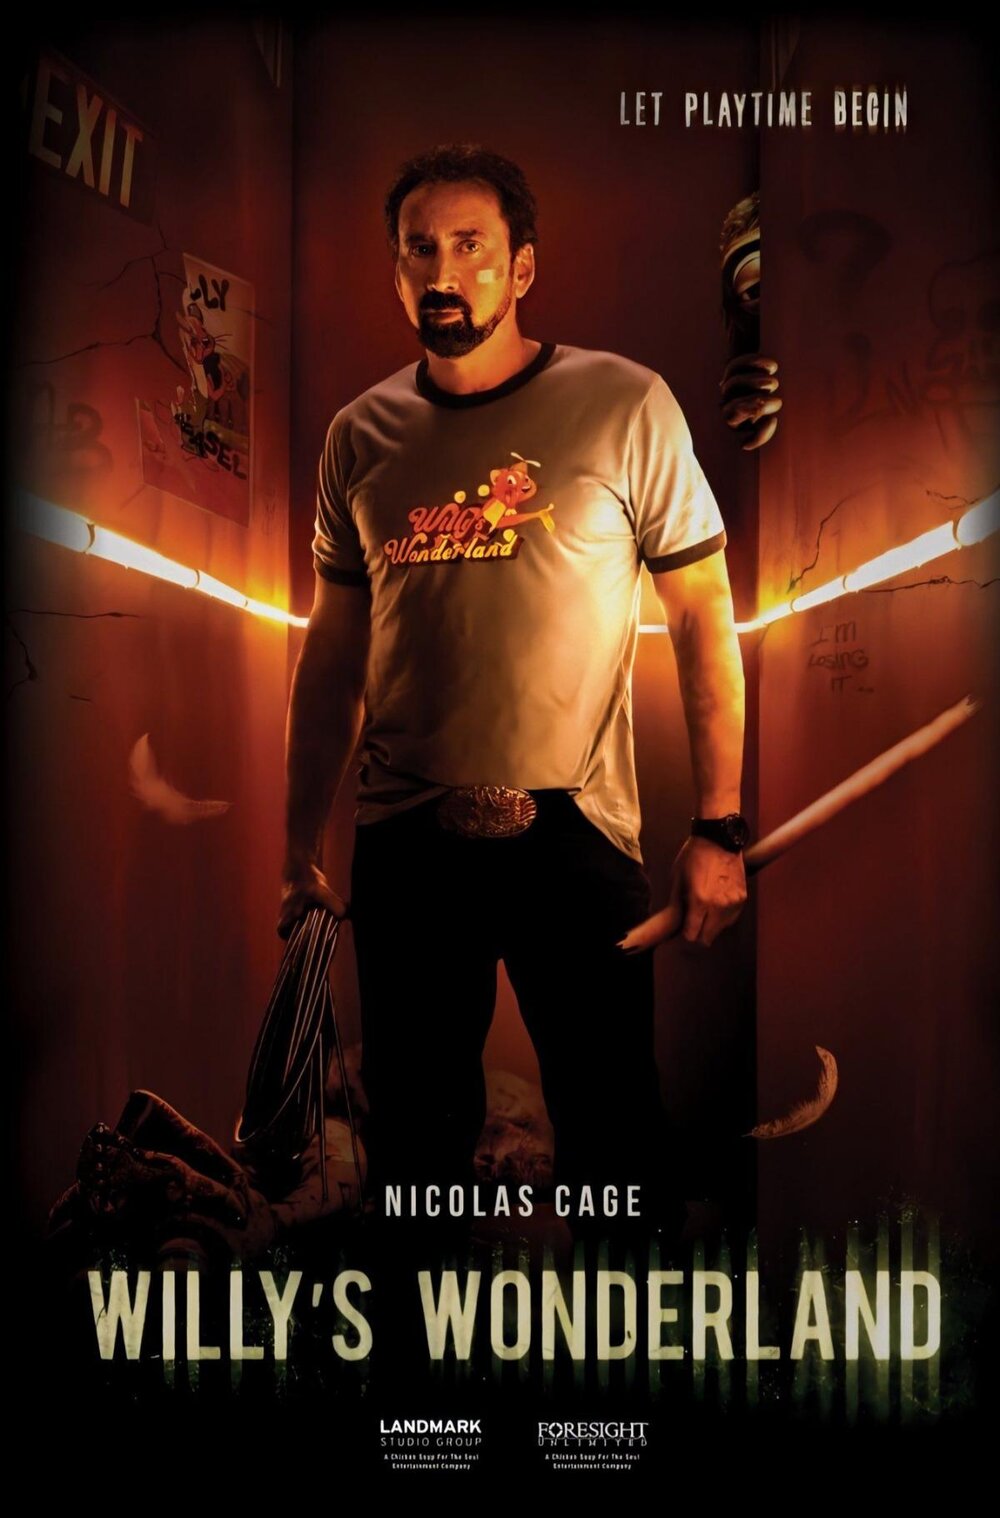 nicolas-cage-battles-demonic-animatronic-animals-in-trailer-for-wallys-wonderland4